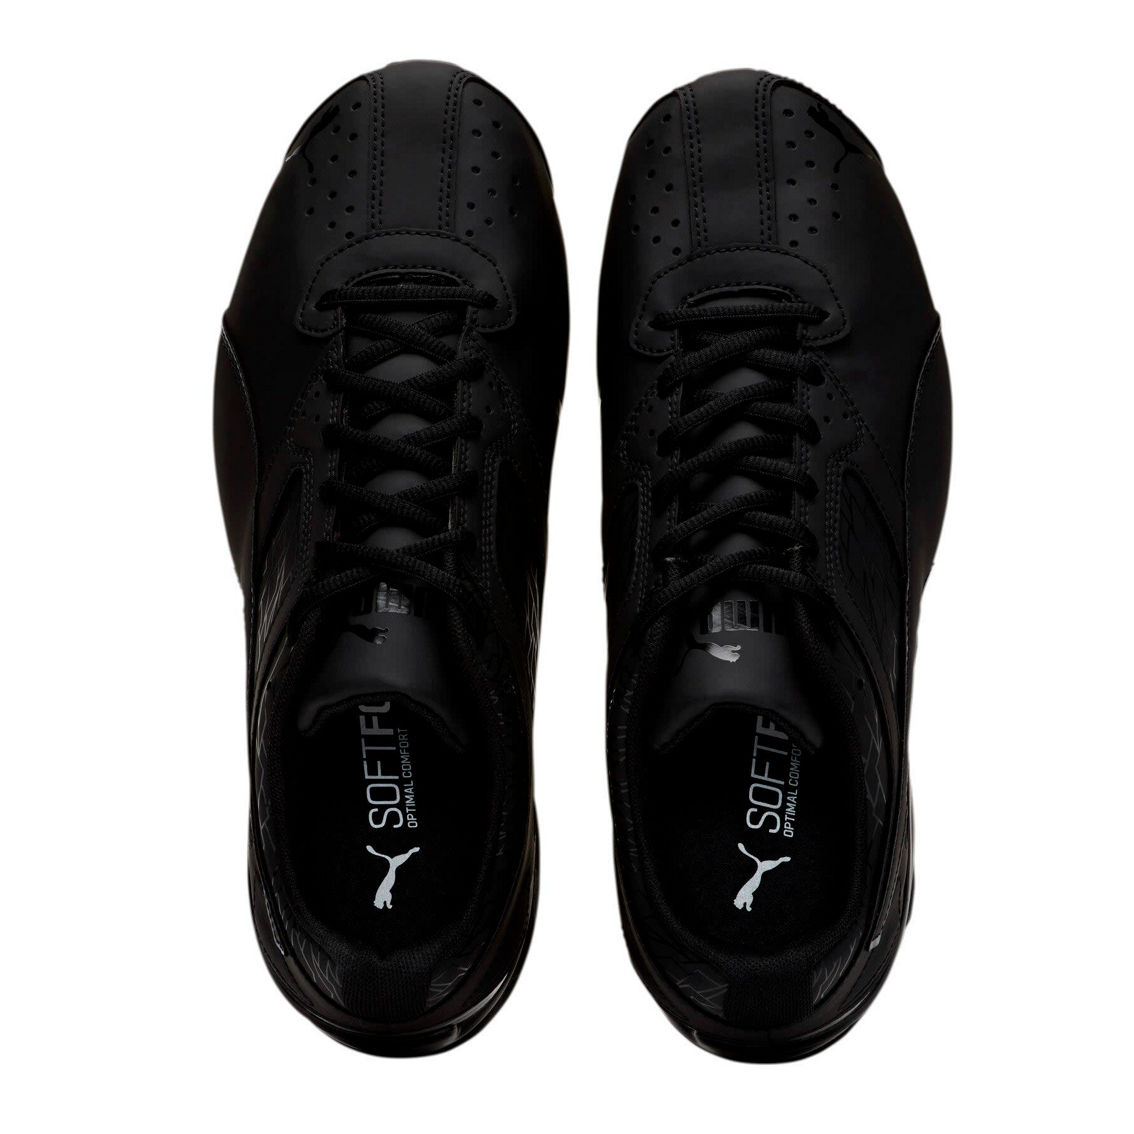 PUMA Men's Tazon 6 Fracture FM Wide Sneakers - Image 5 of 5